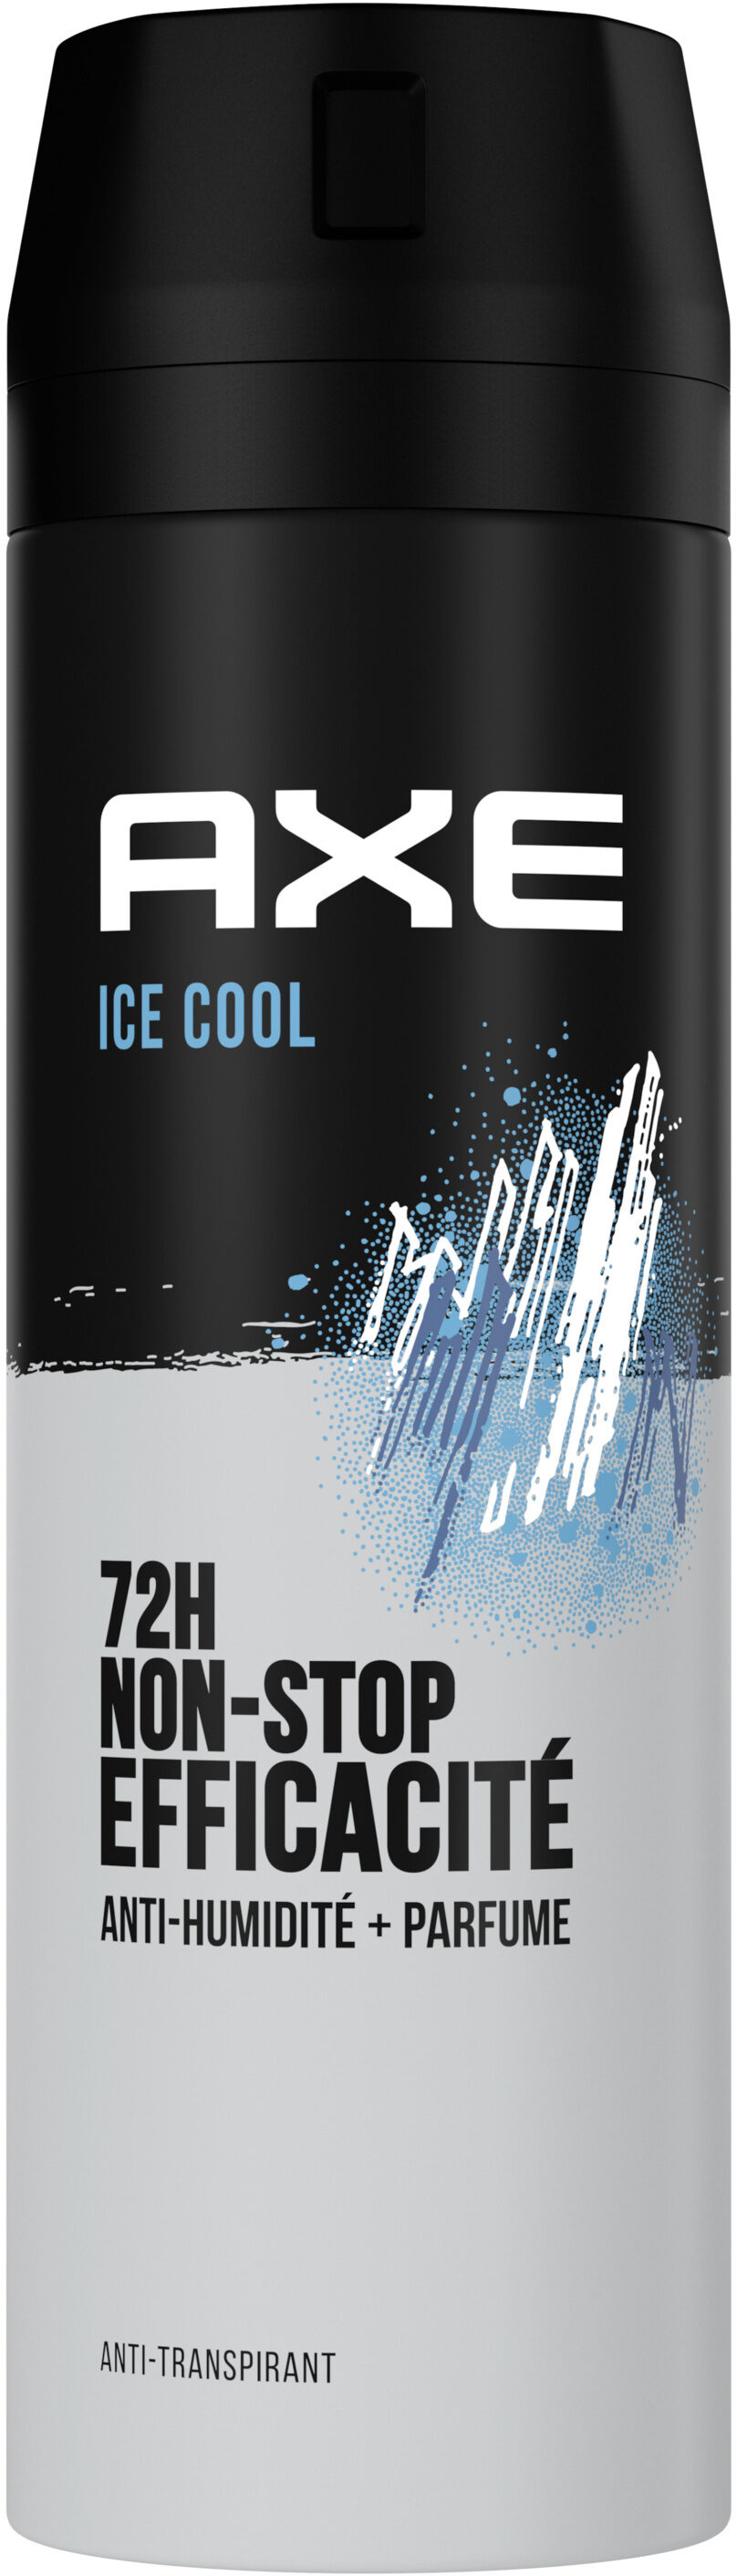 AXE Anti-Transpirant Homme Ice Cool 72h Anti-Humidité 200ml - Produit - fr